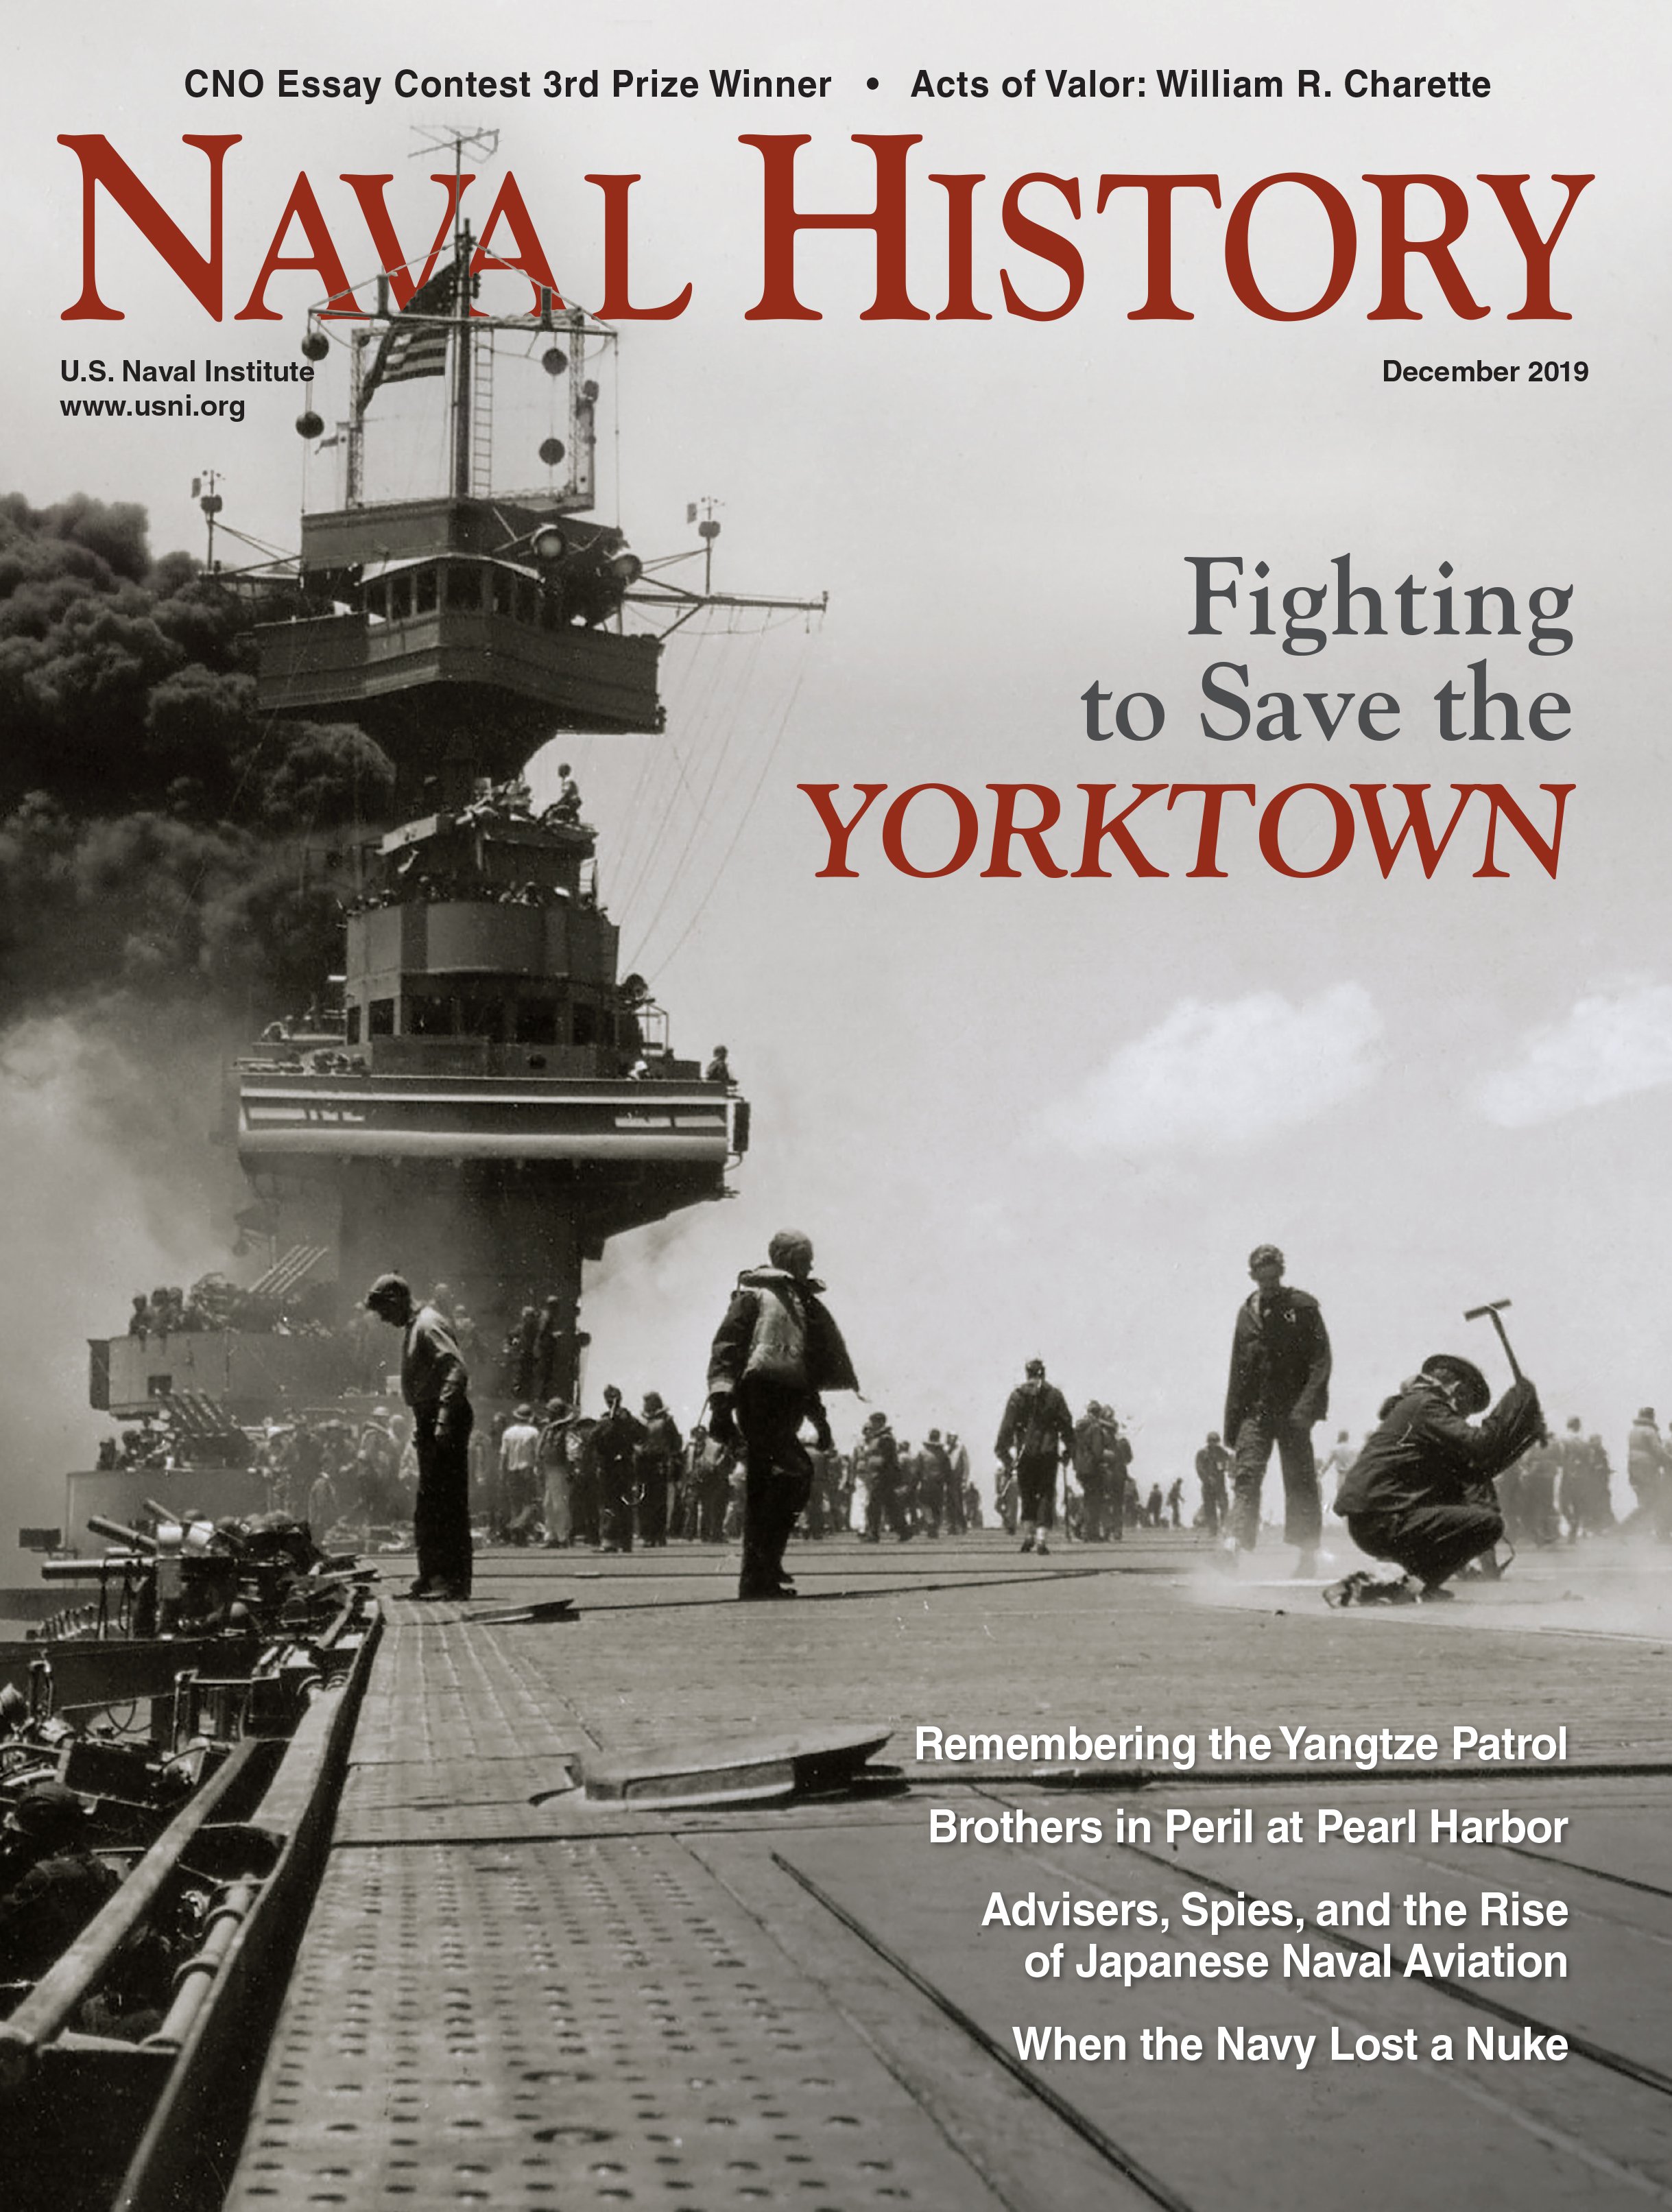 Naval History Magazine - December 2019 Volume 34, Number 6 Cover